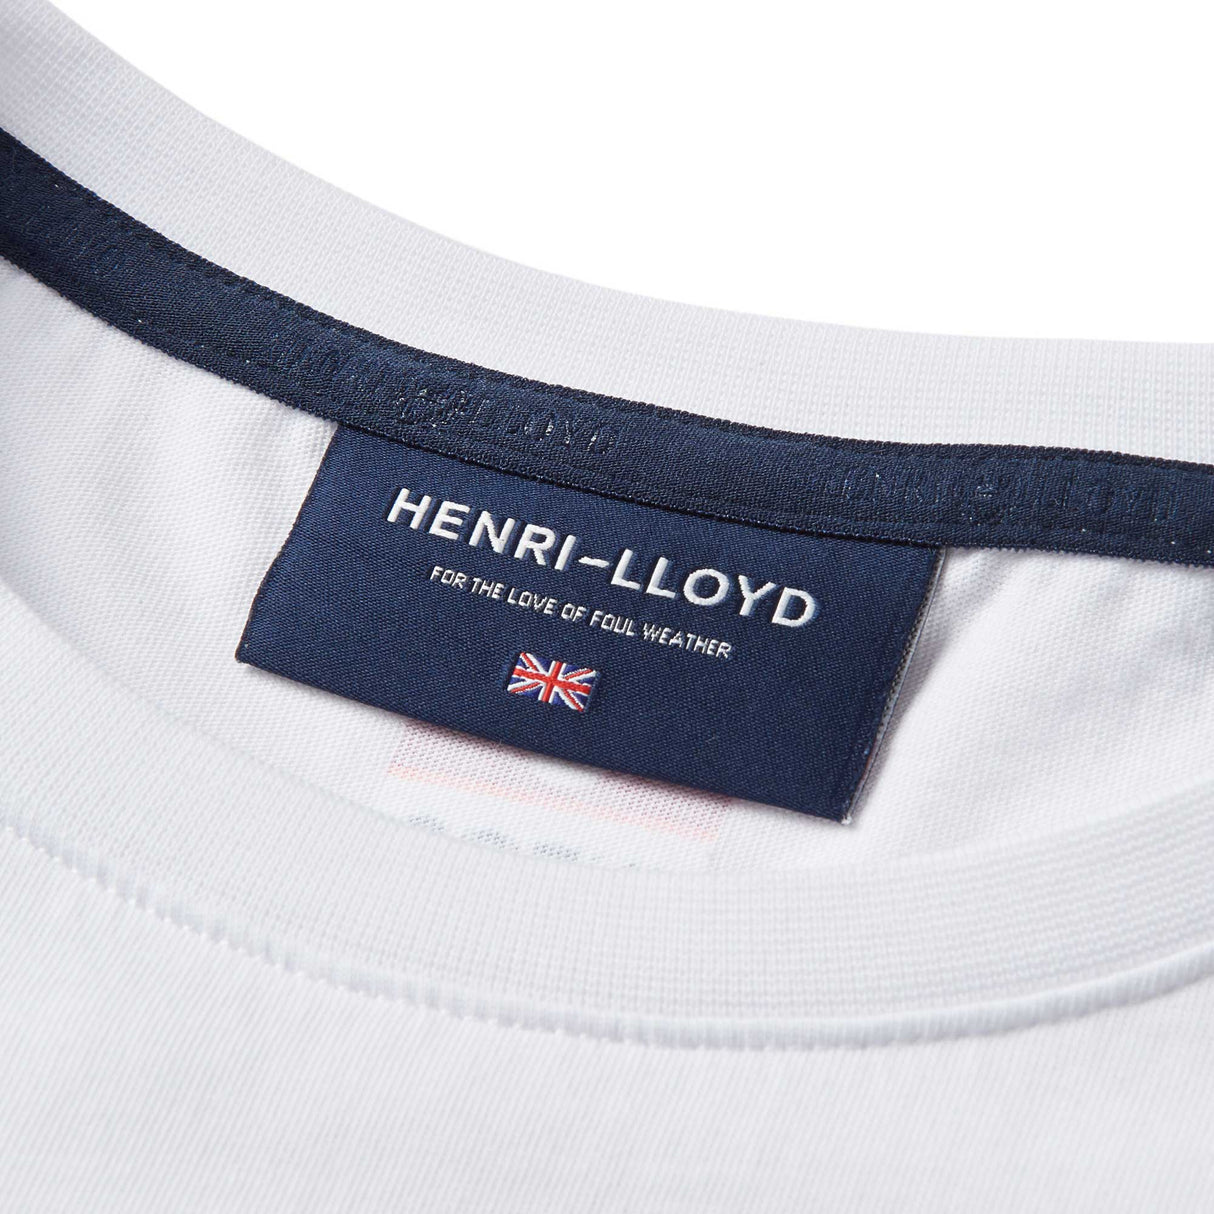 Henri Lloyd Men's Ineos Britannia Supporter T-Shirt